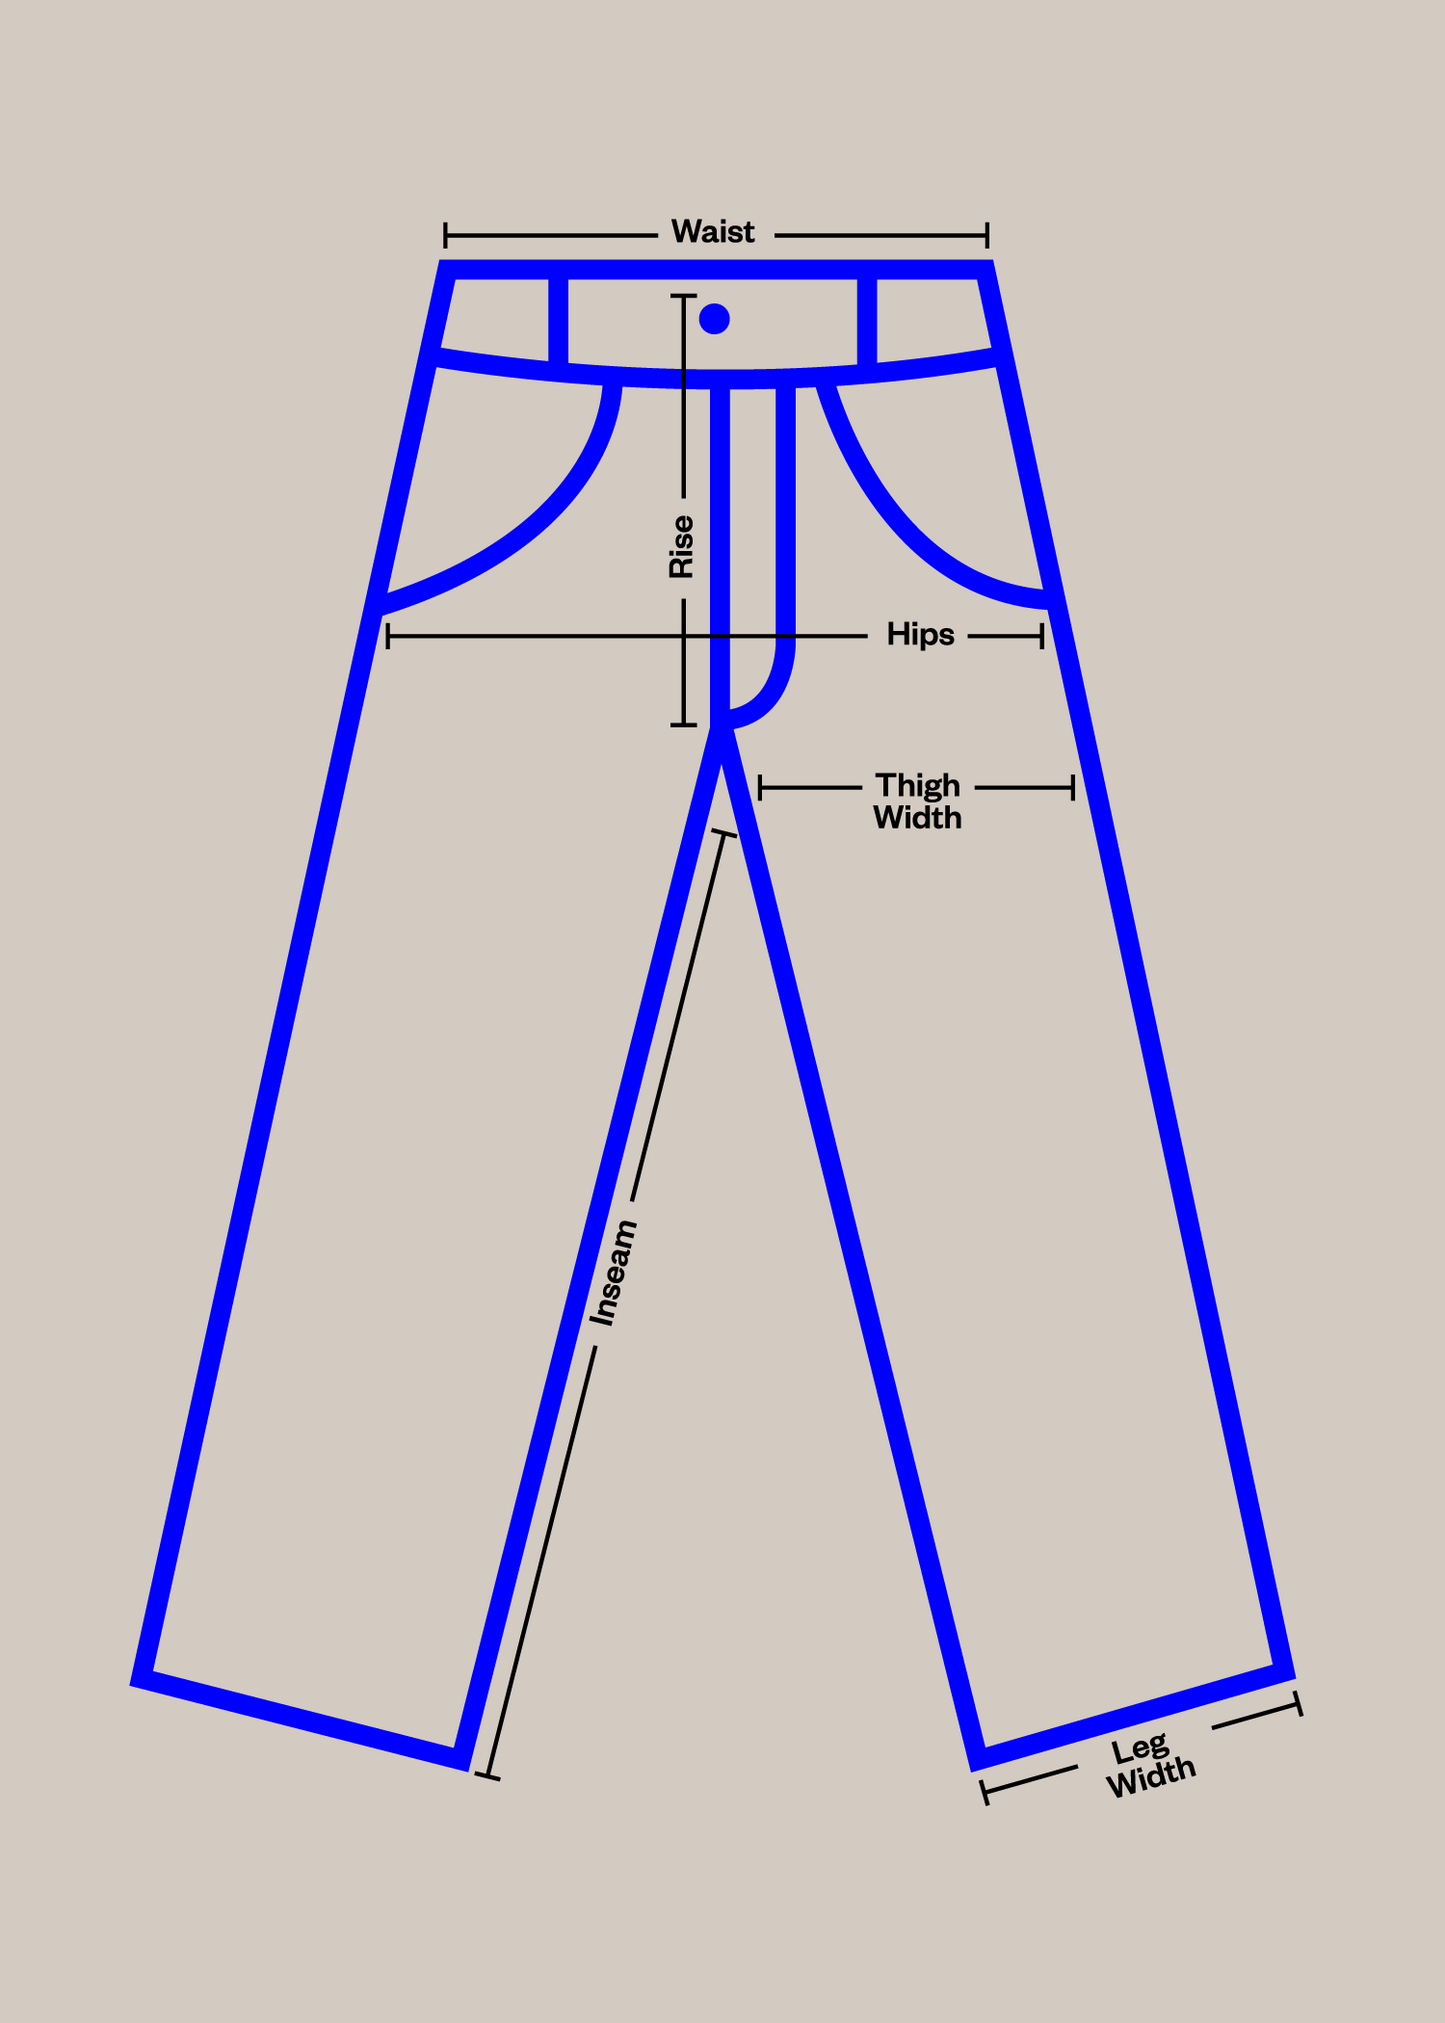 Carhartt Double Knee Overalls Size S/M